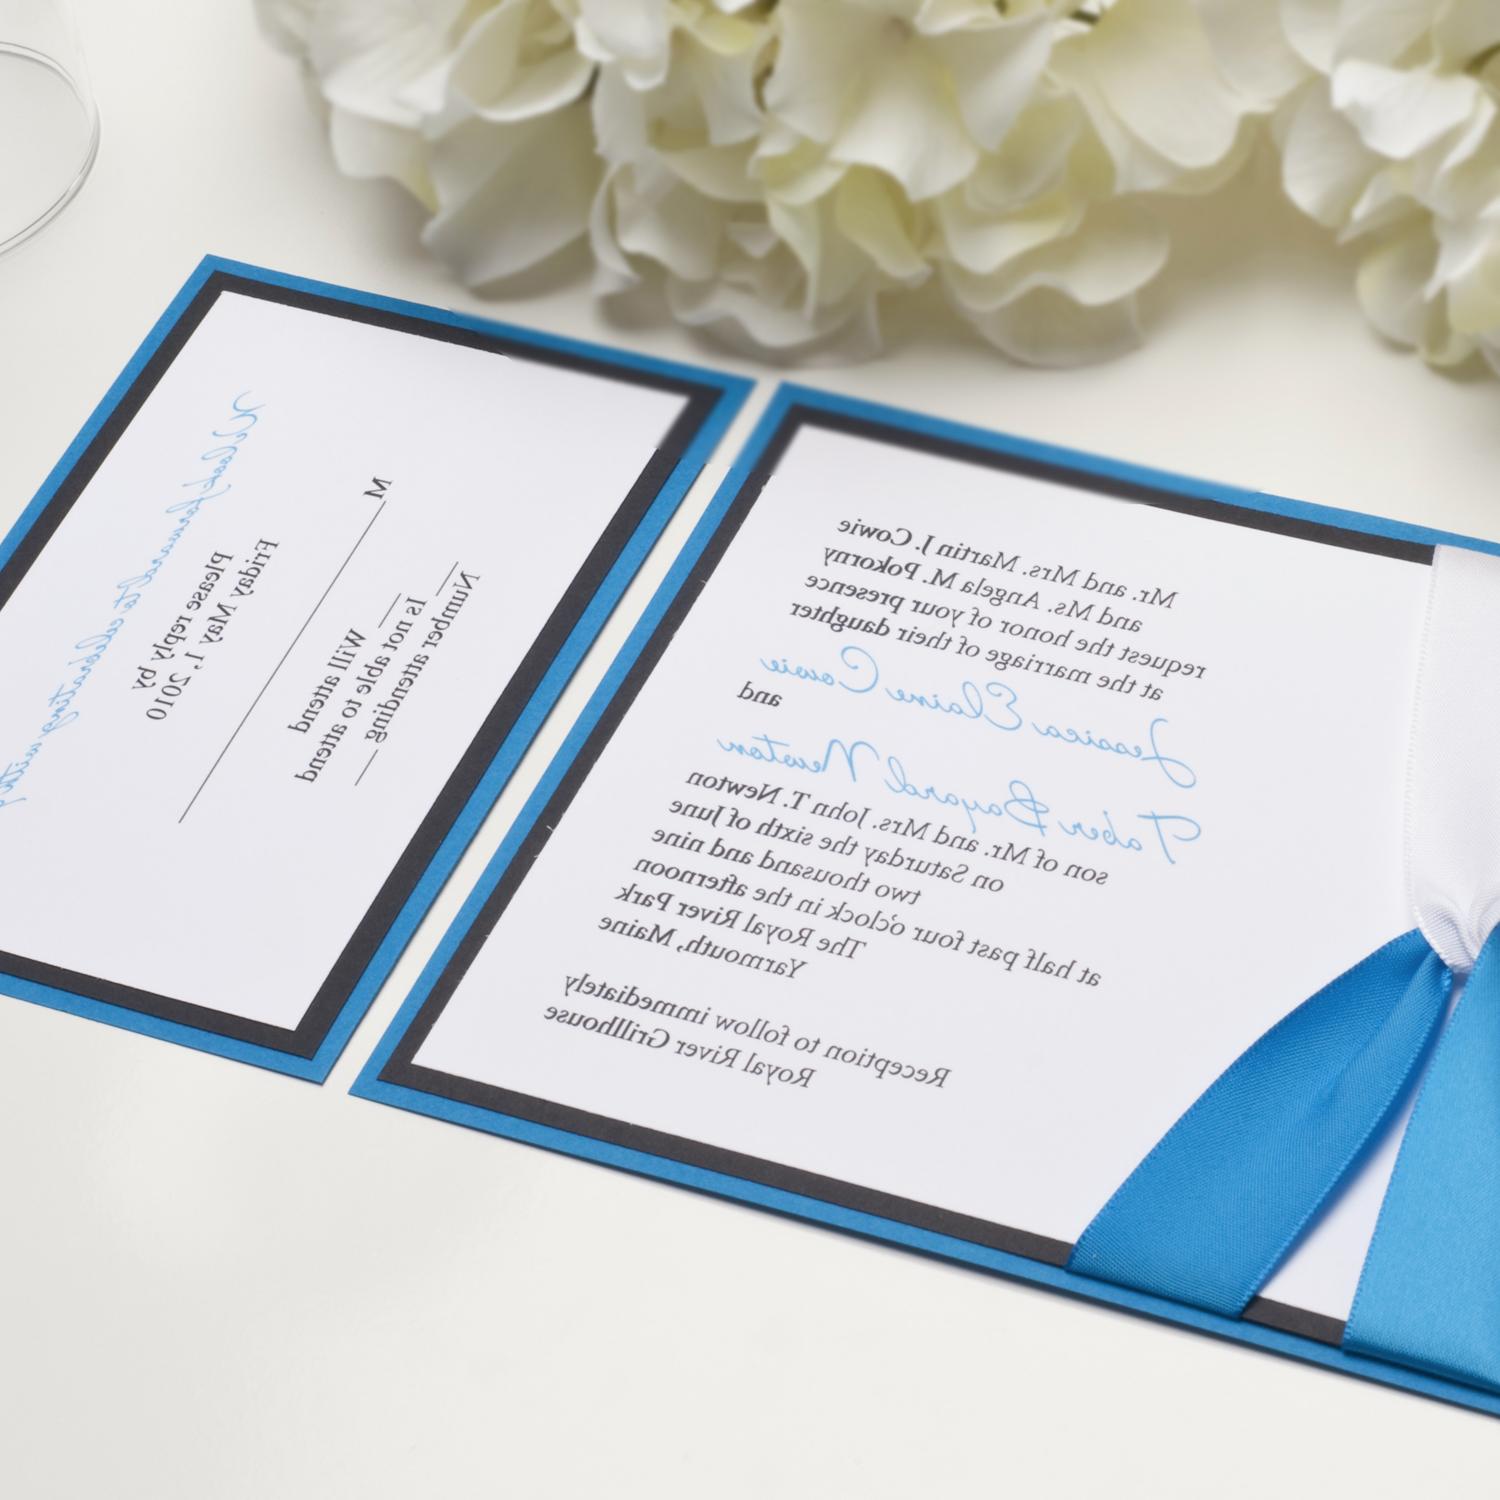 Romantic wedding invitations custom romantic wedding invitations stationery